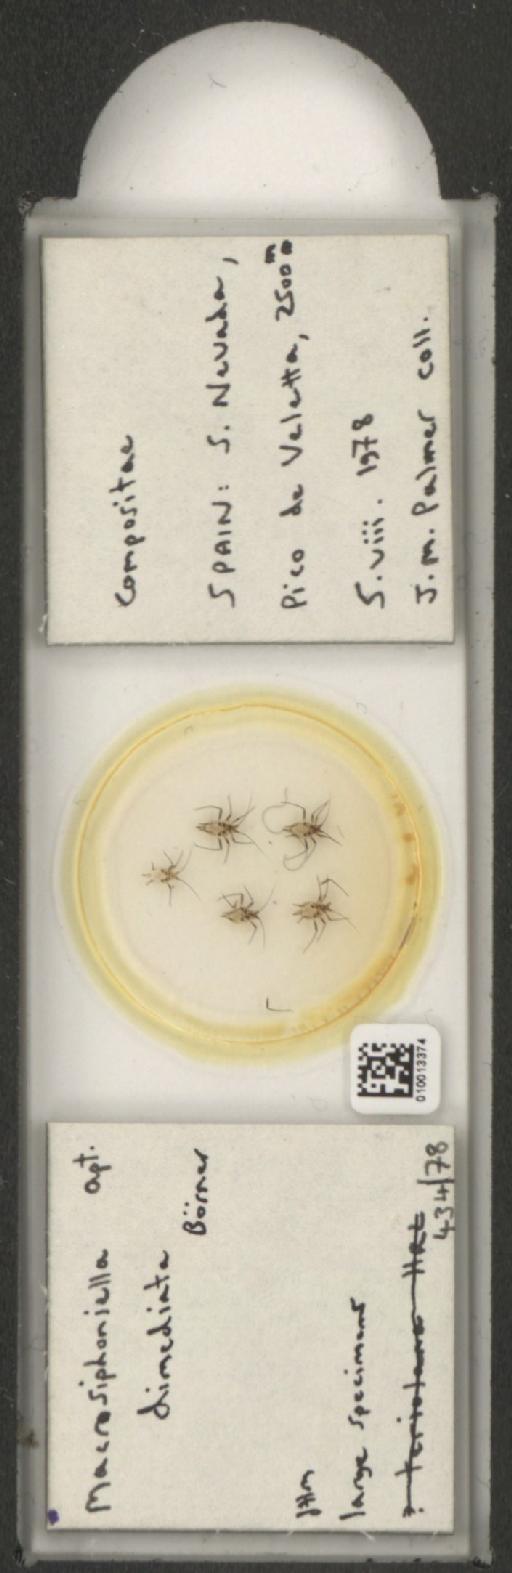 Macrosiphoniella dimidiata Börner, 1942 - 010013374_112659_1094720